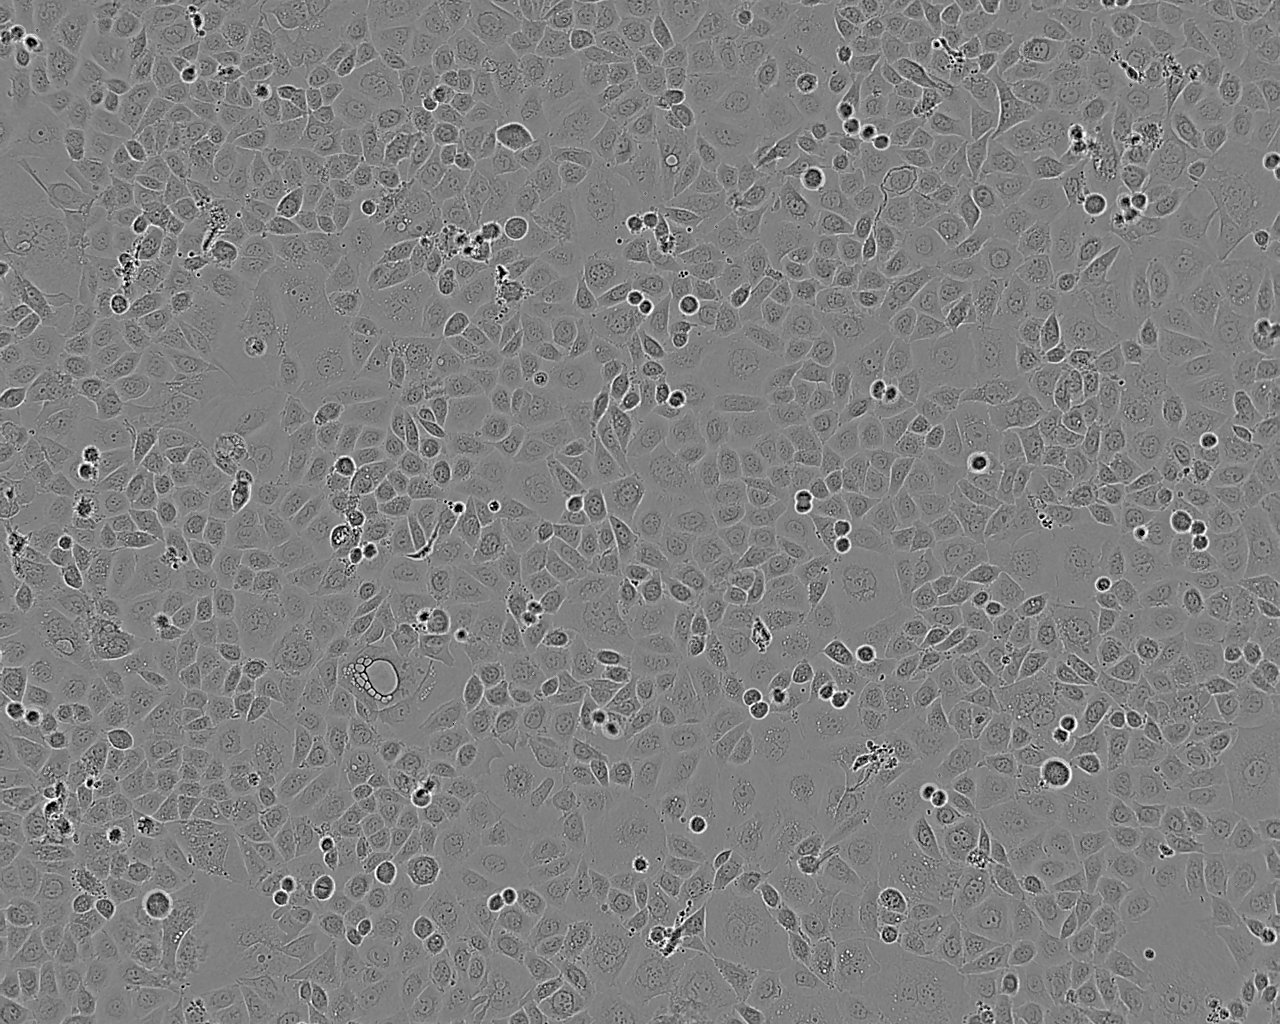 INS-1E Cell|大鼠胰岛素瘤细胞,INS-1E Cell